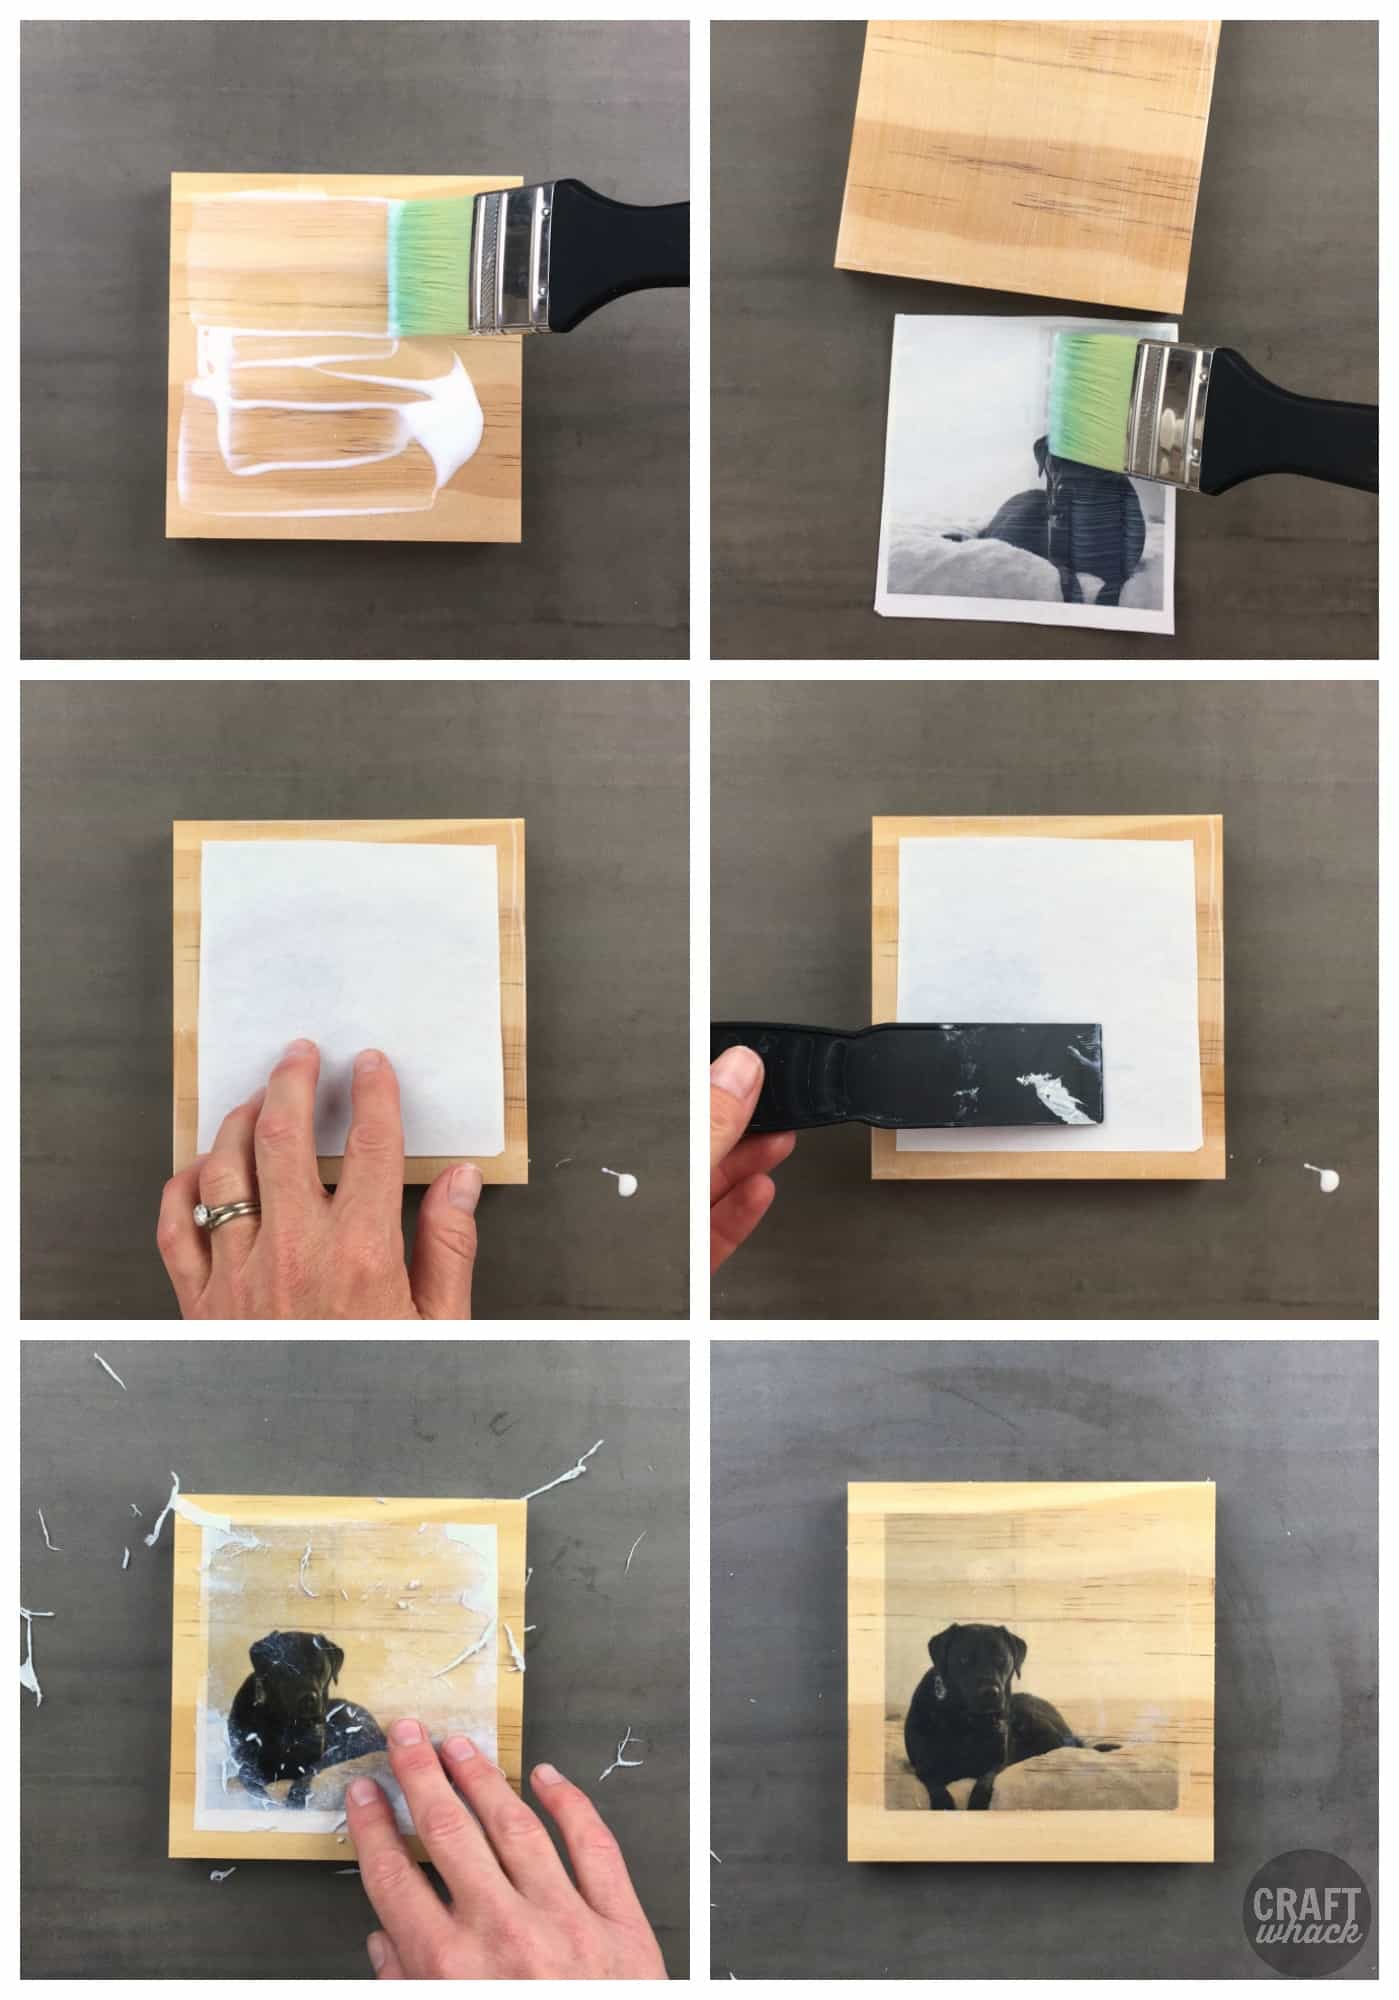 Acrylic gel medium photo transfer process - image of dog